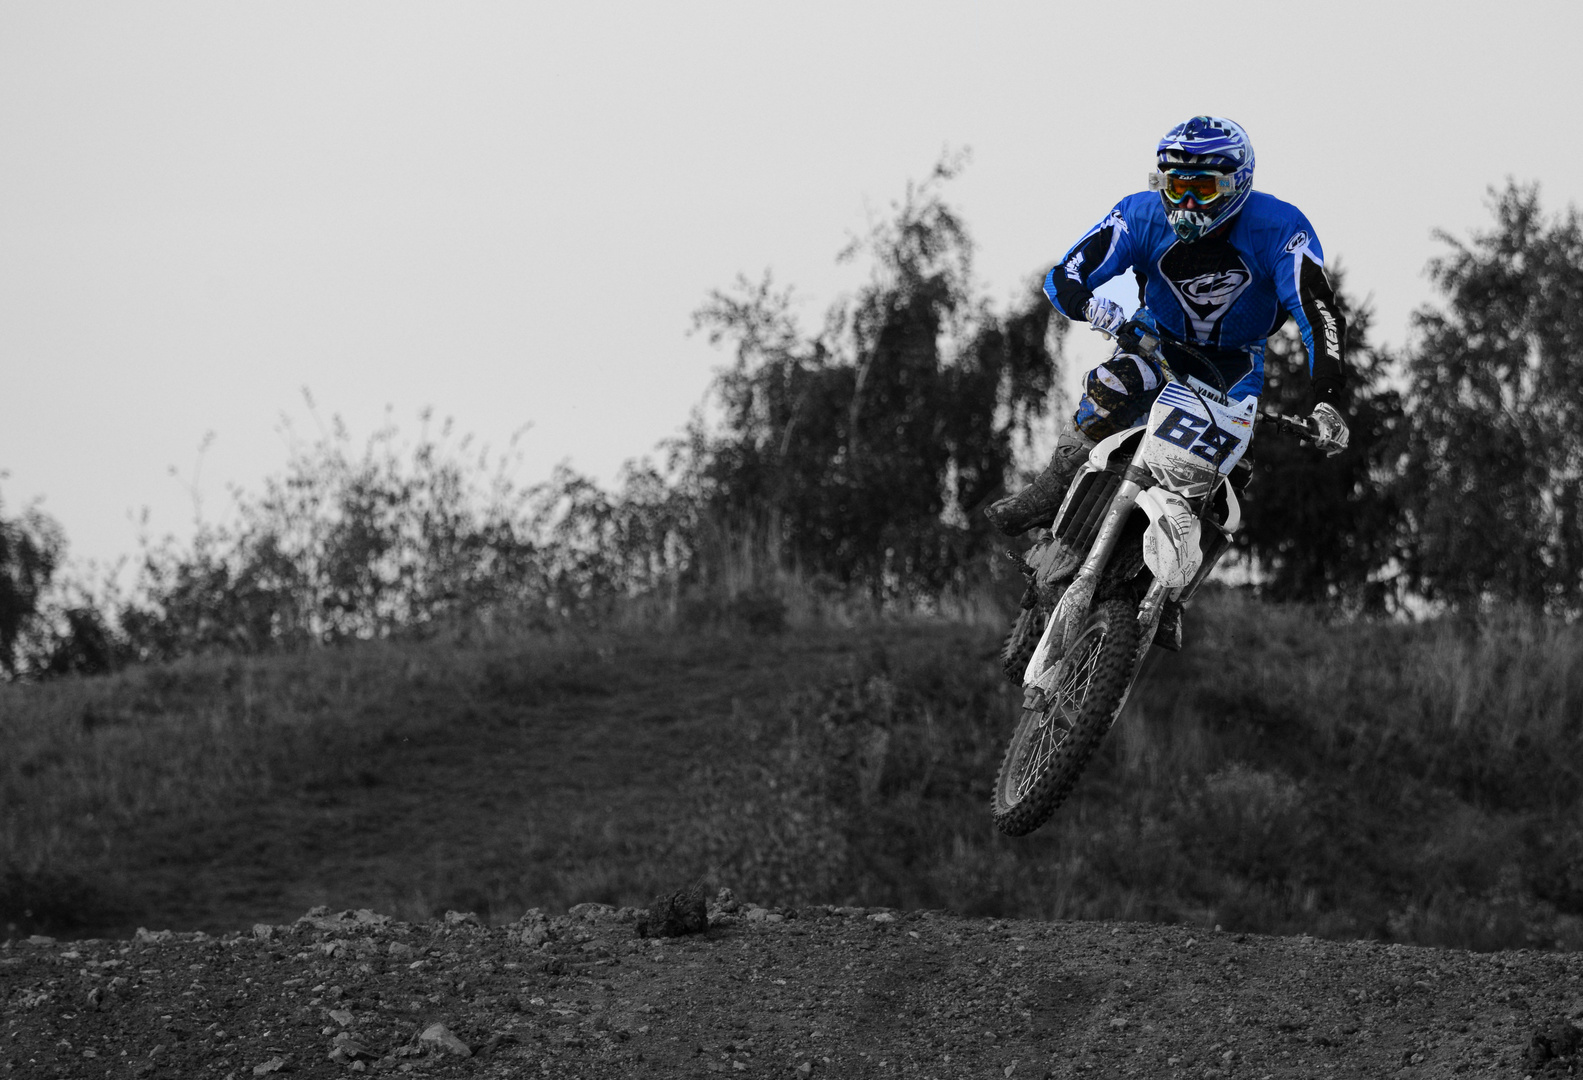 blue rider